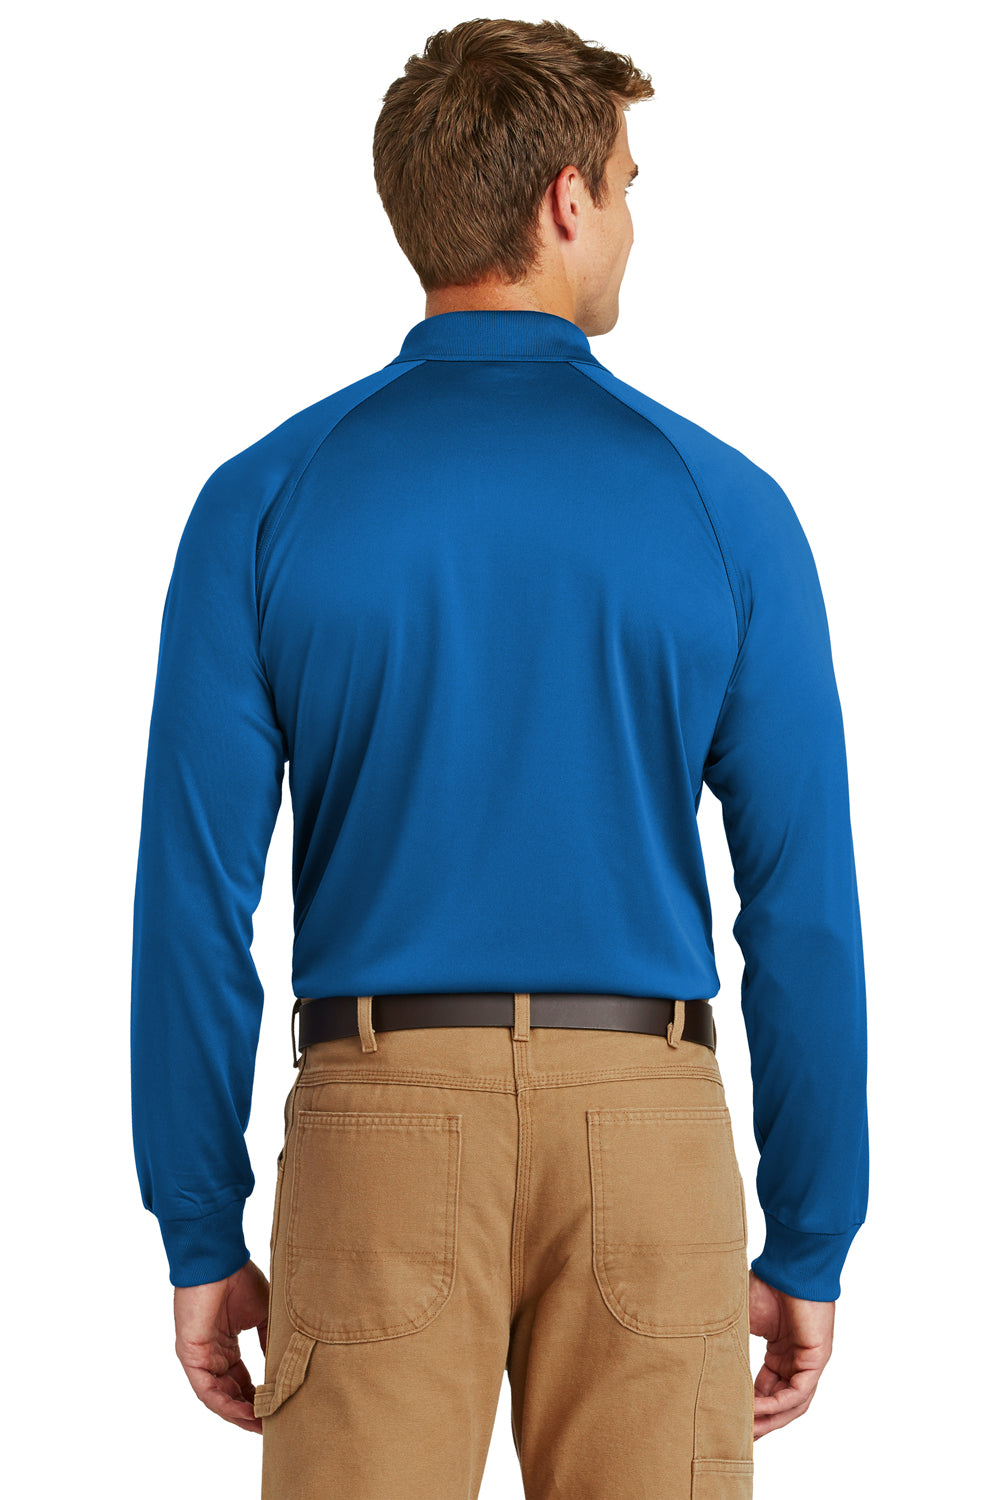 CornerStone CS410LS Mens Select Tactical Moisture Wicking Long Sleeve Polo Shirt Royal Blue Back